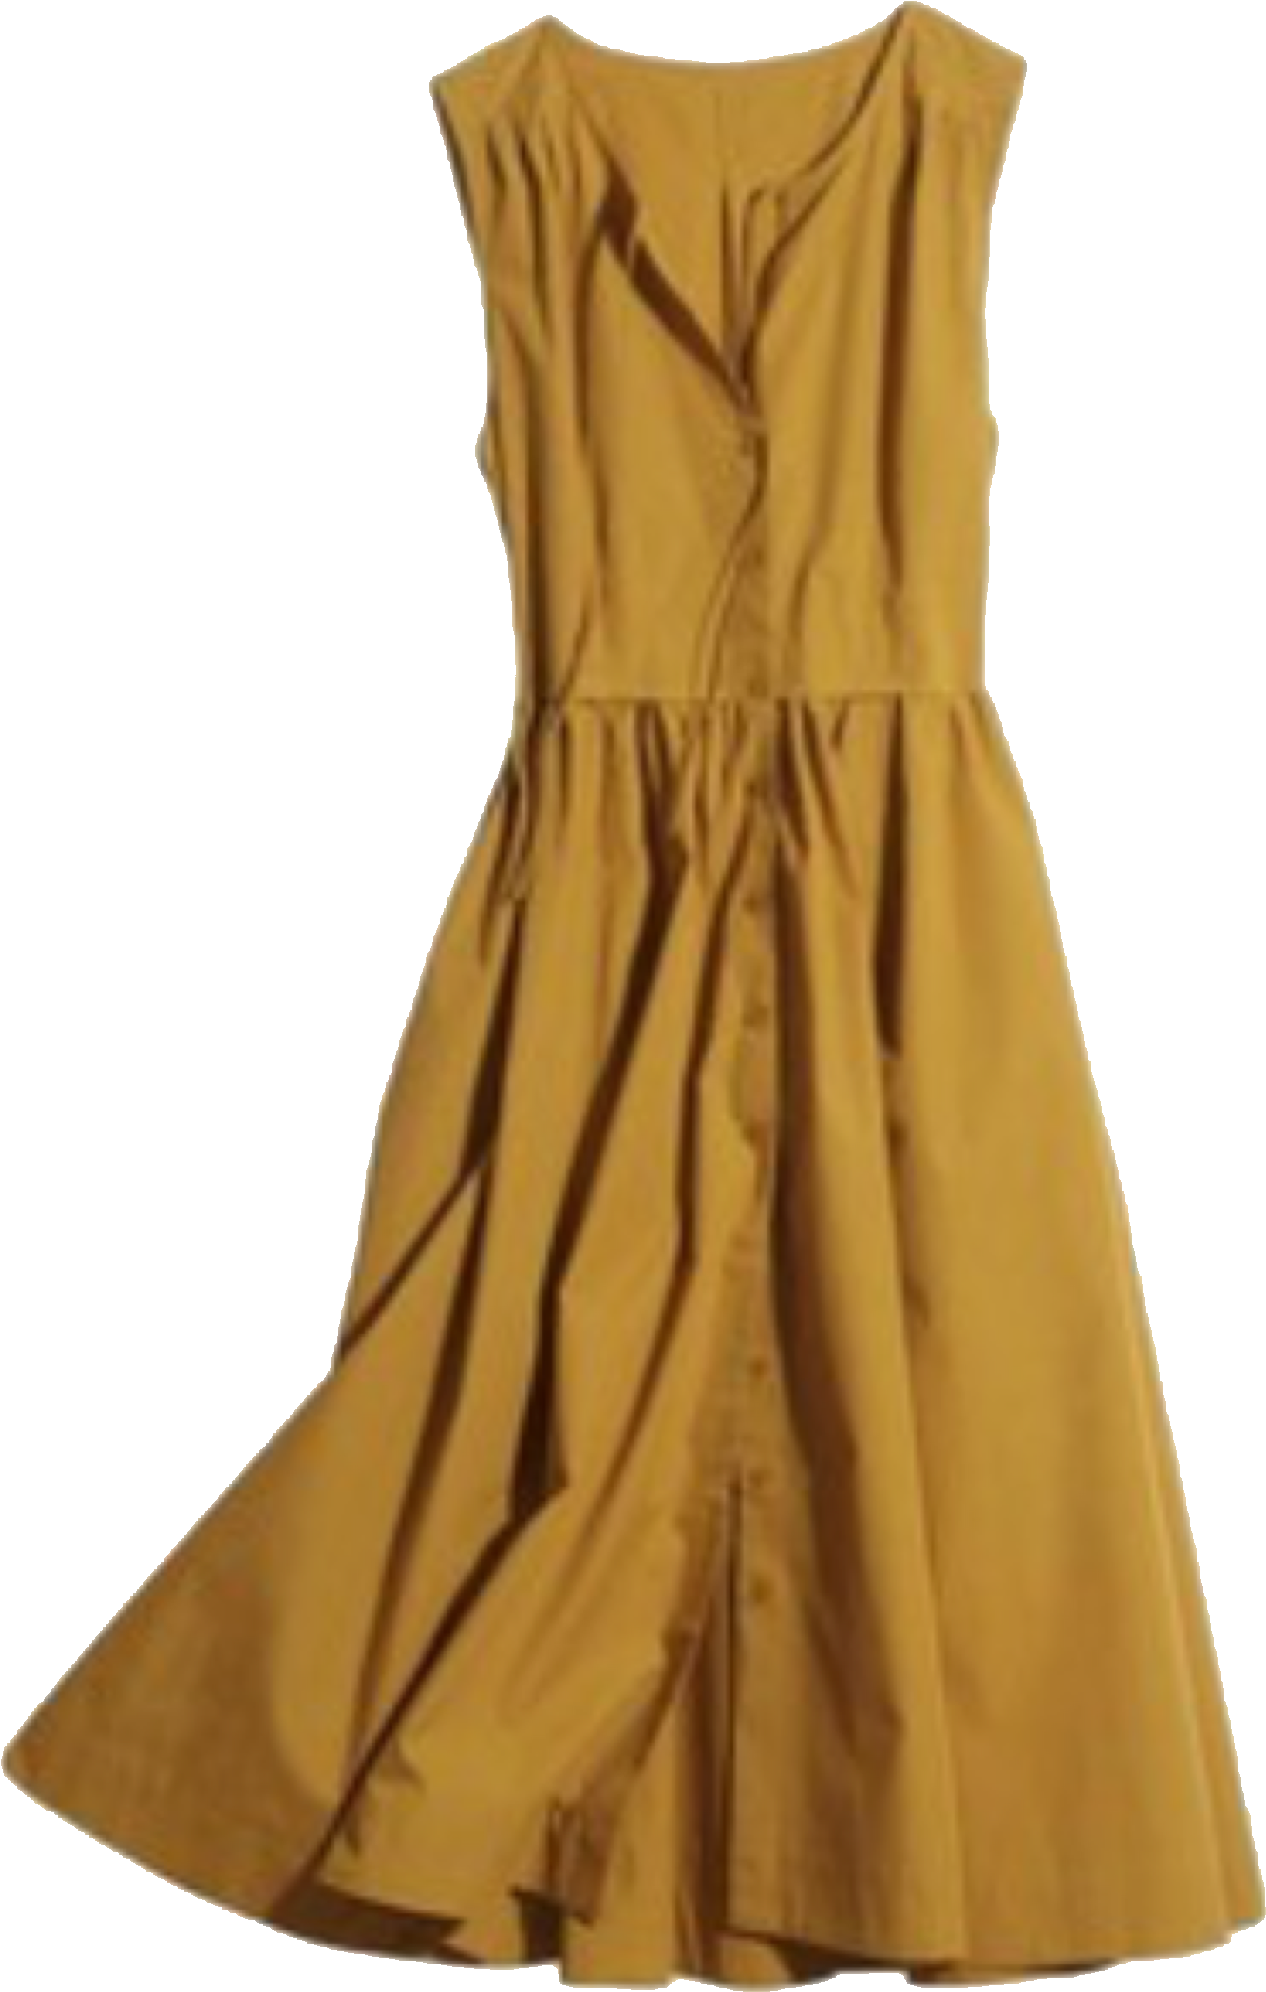 A Yellow Dress On A Swinger